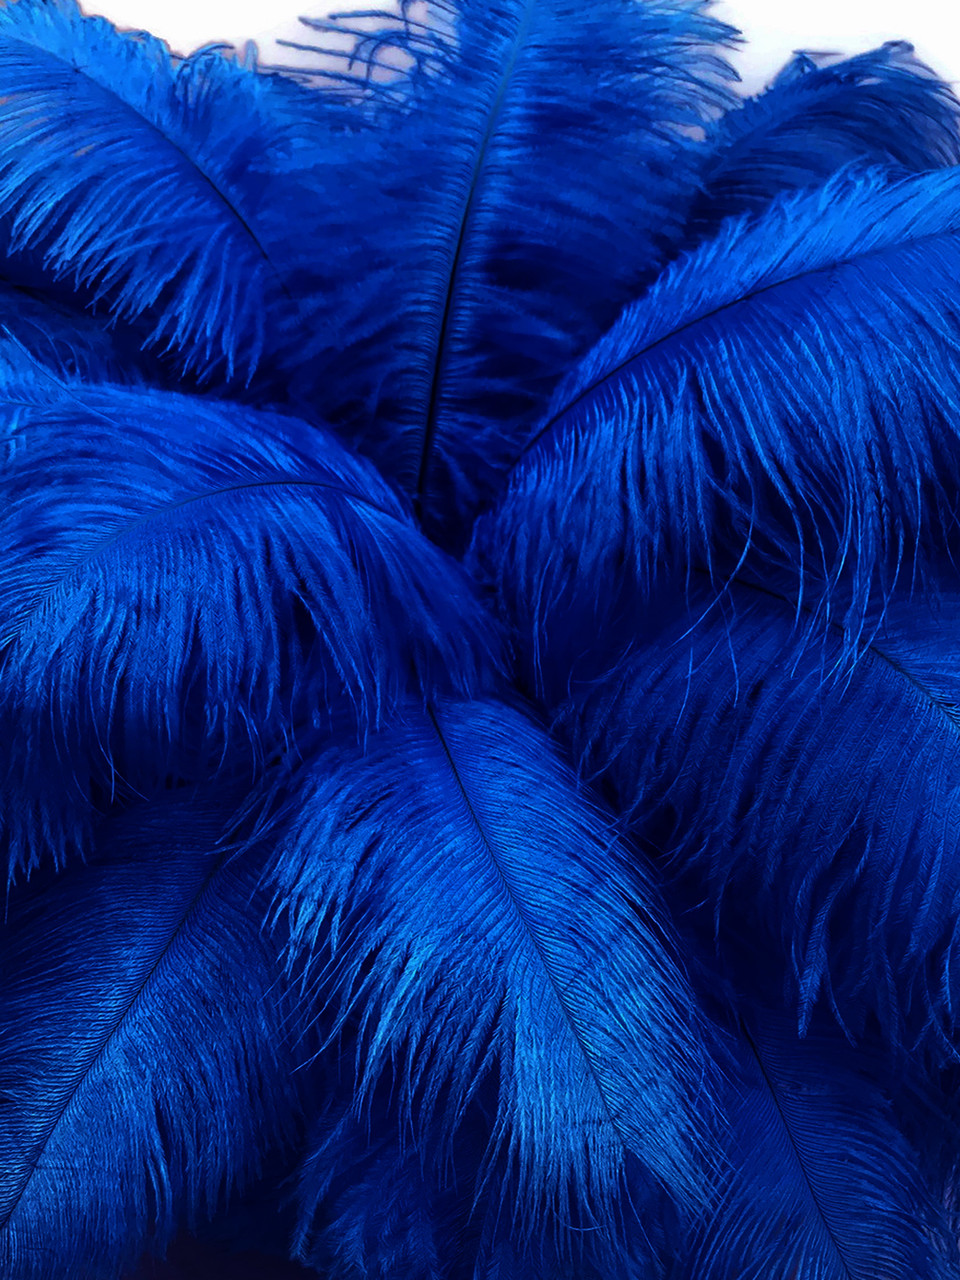 Blue Feathers, 20 Pieces 12-18 Royal Blue Mini Ostrich Spads Chick